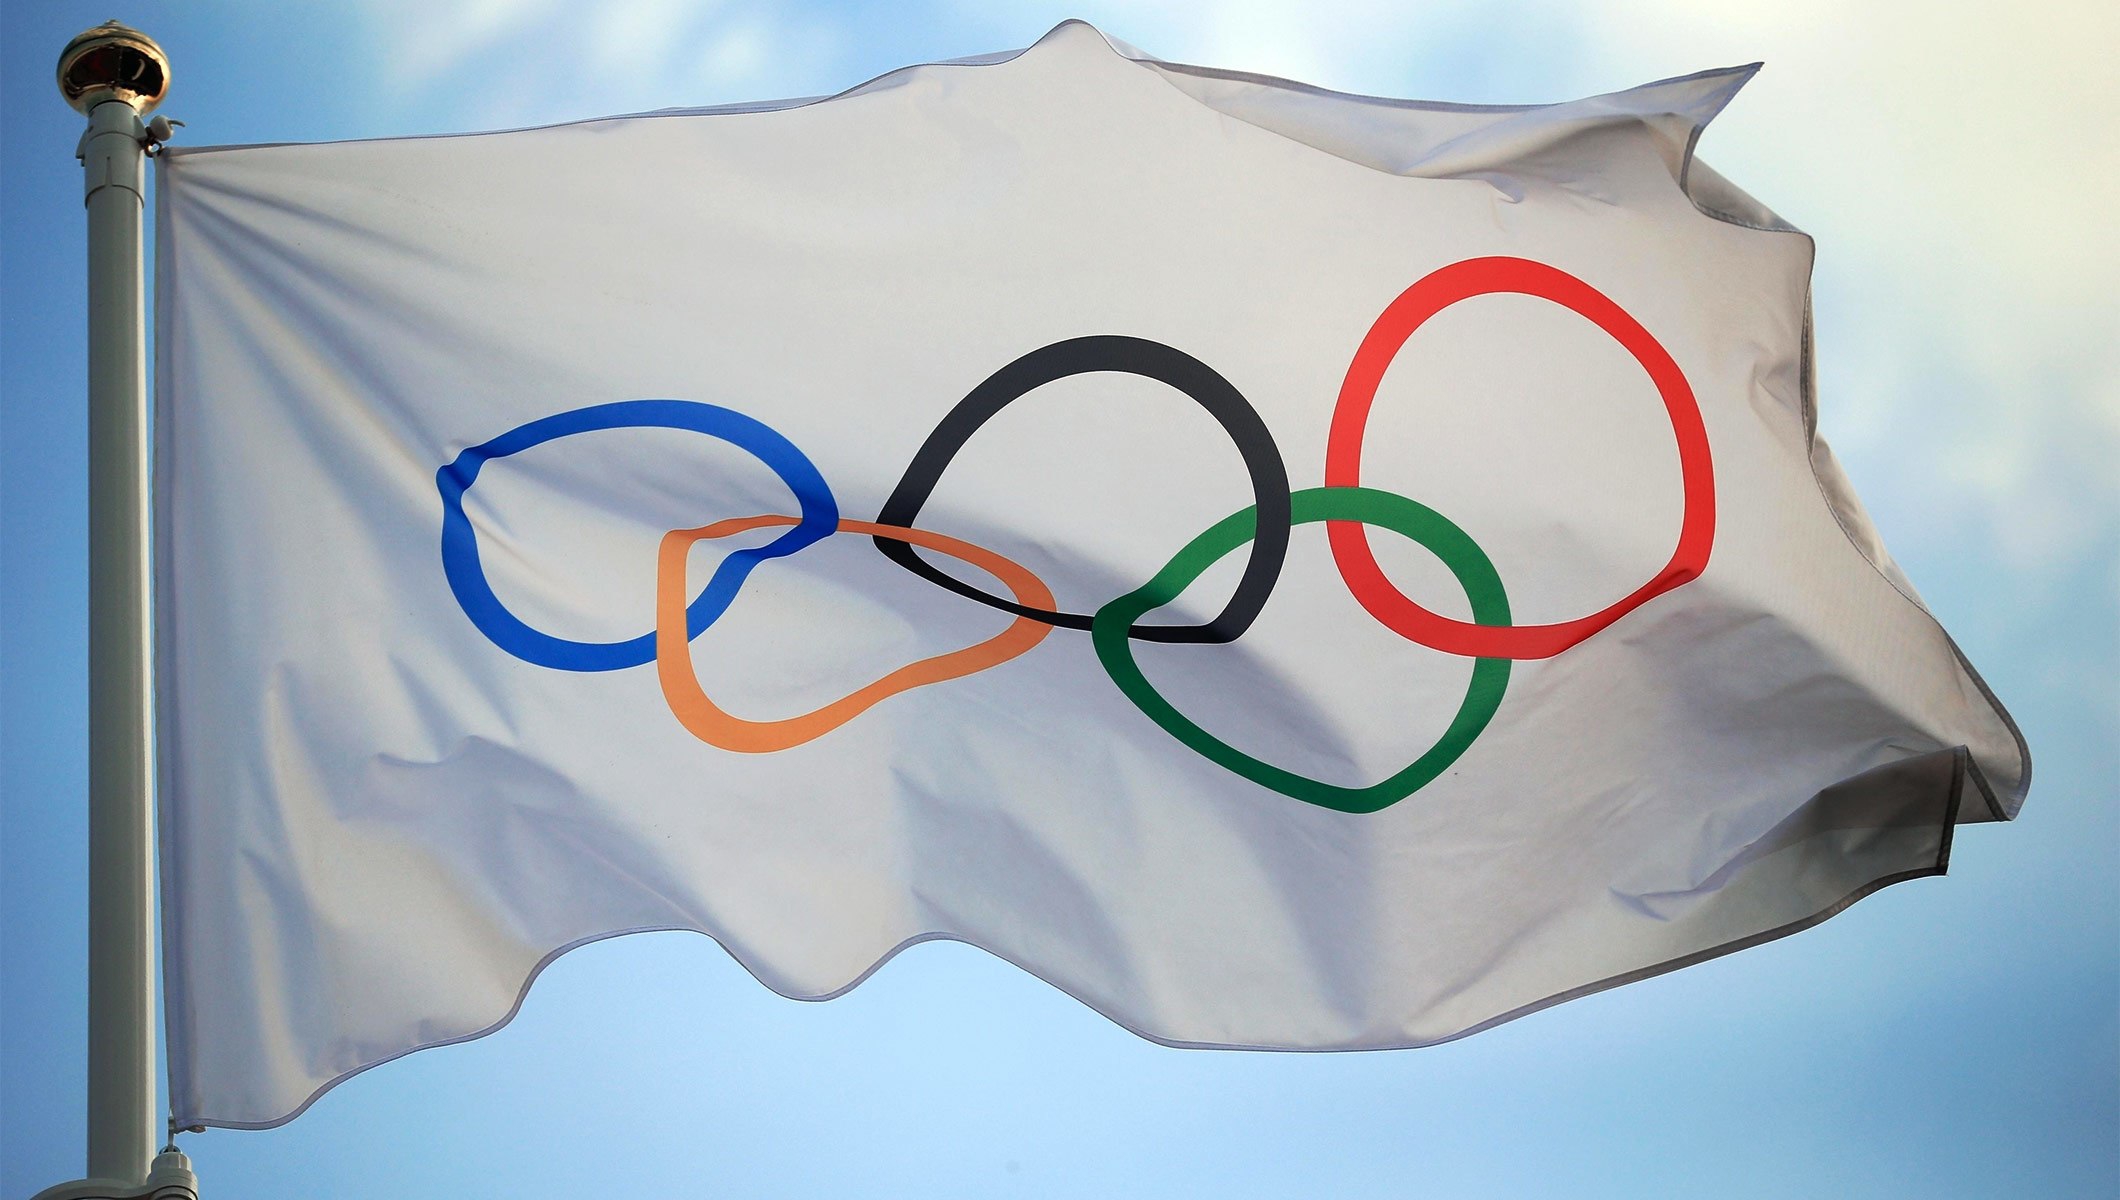 Олимпийский комитет показал символику для российских спортсменов - фото 1